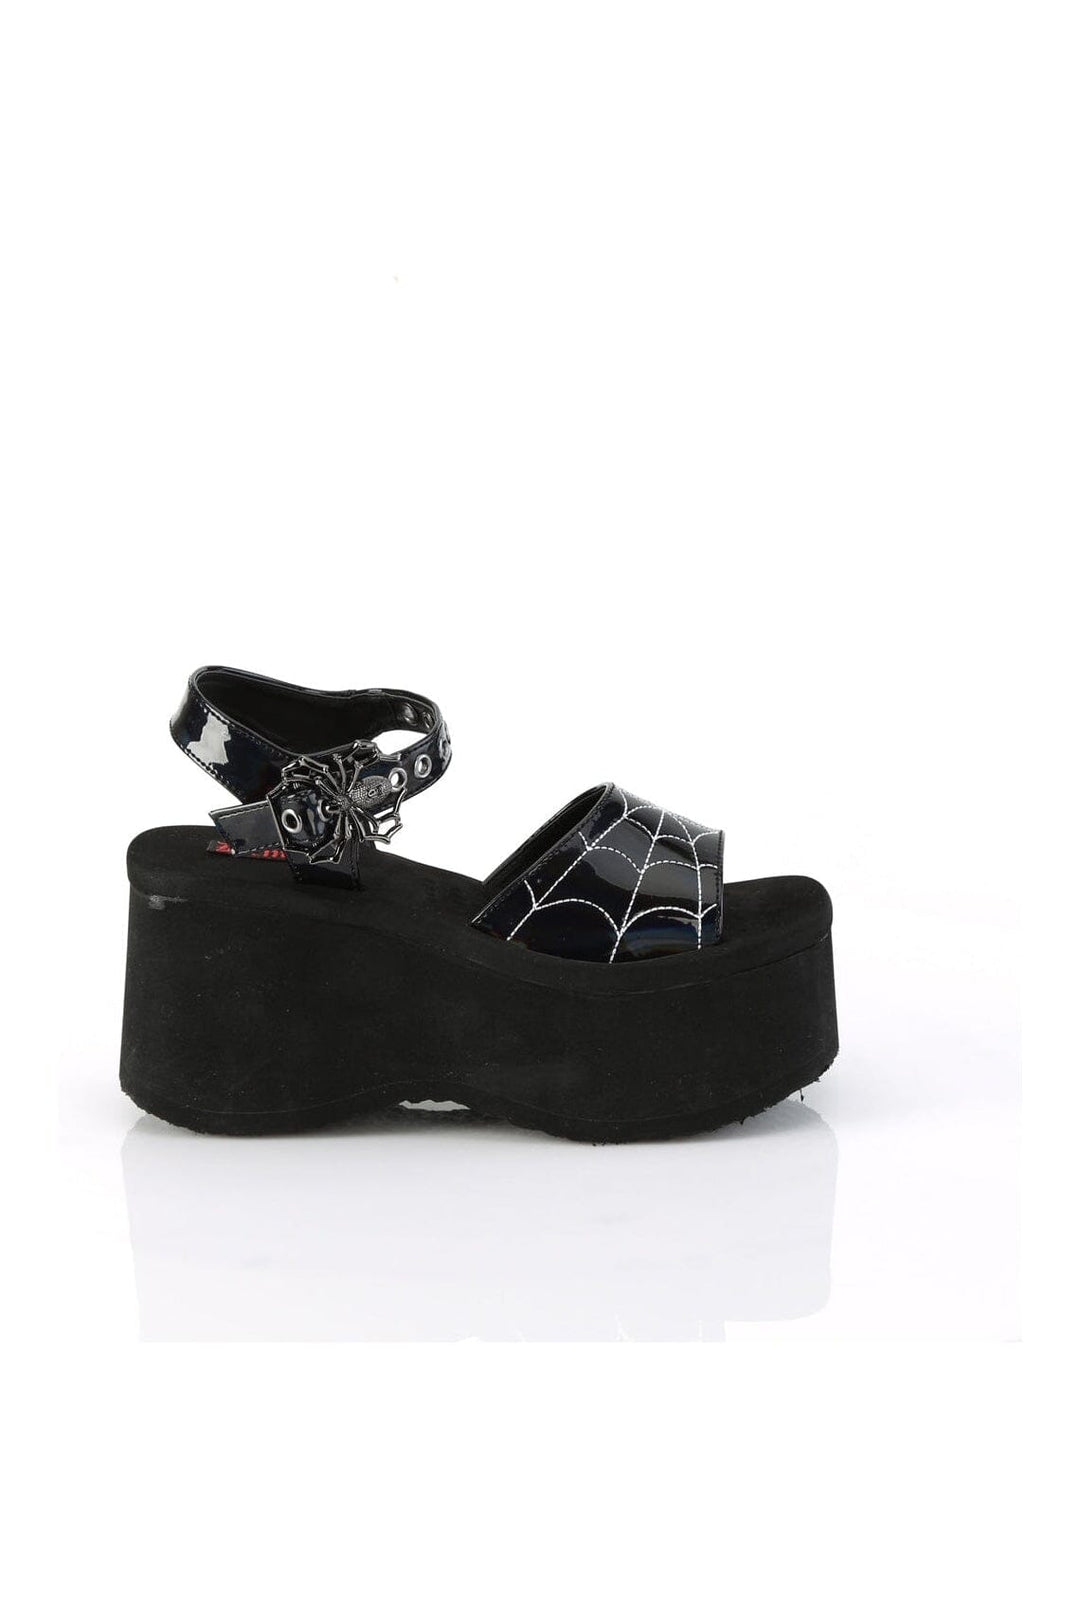 FUNN-10 Black Hologram Patent Sandal-Sandals-Demonia-SEXYSHOES.COM